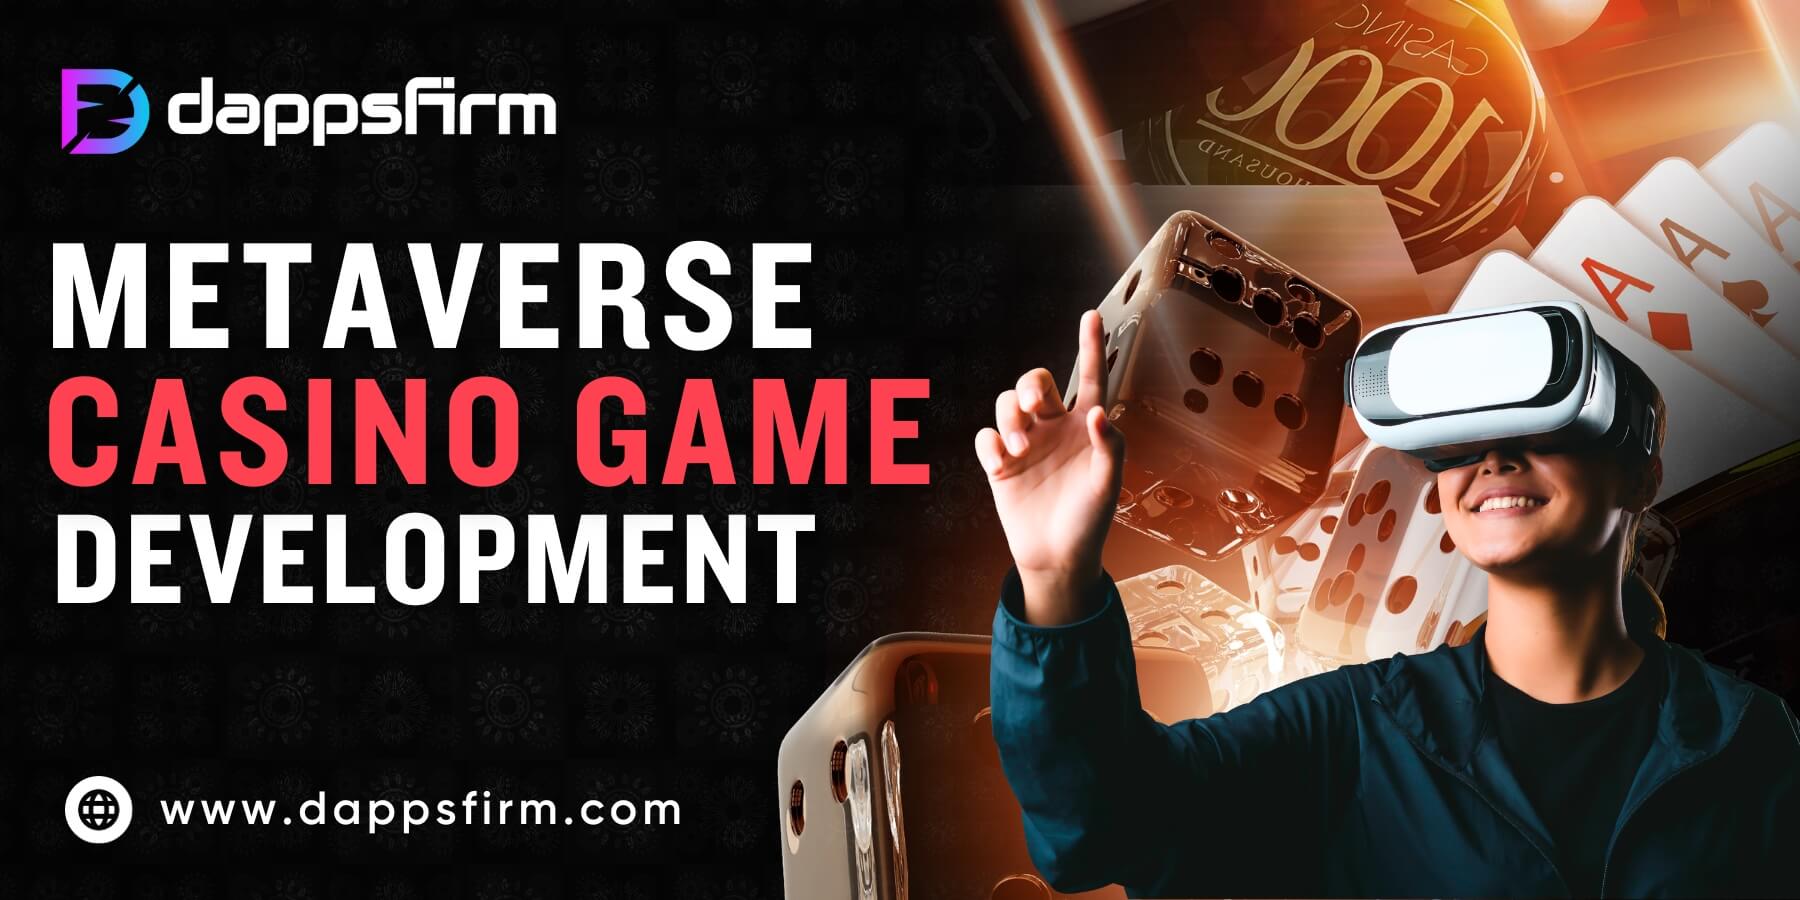 Metaverse Casino Game Development Company